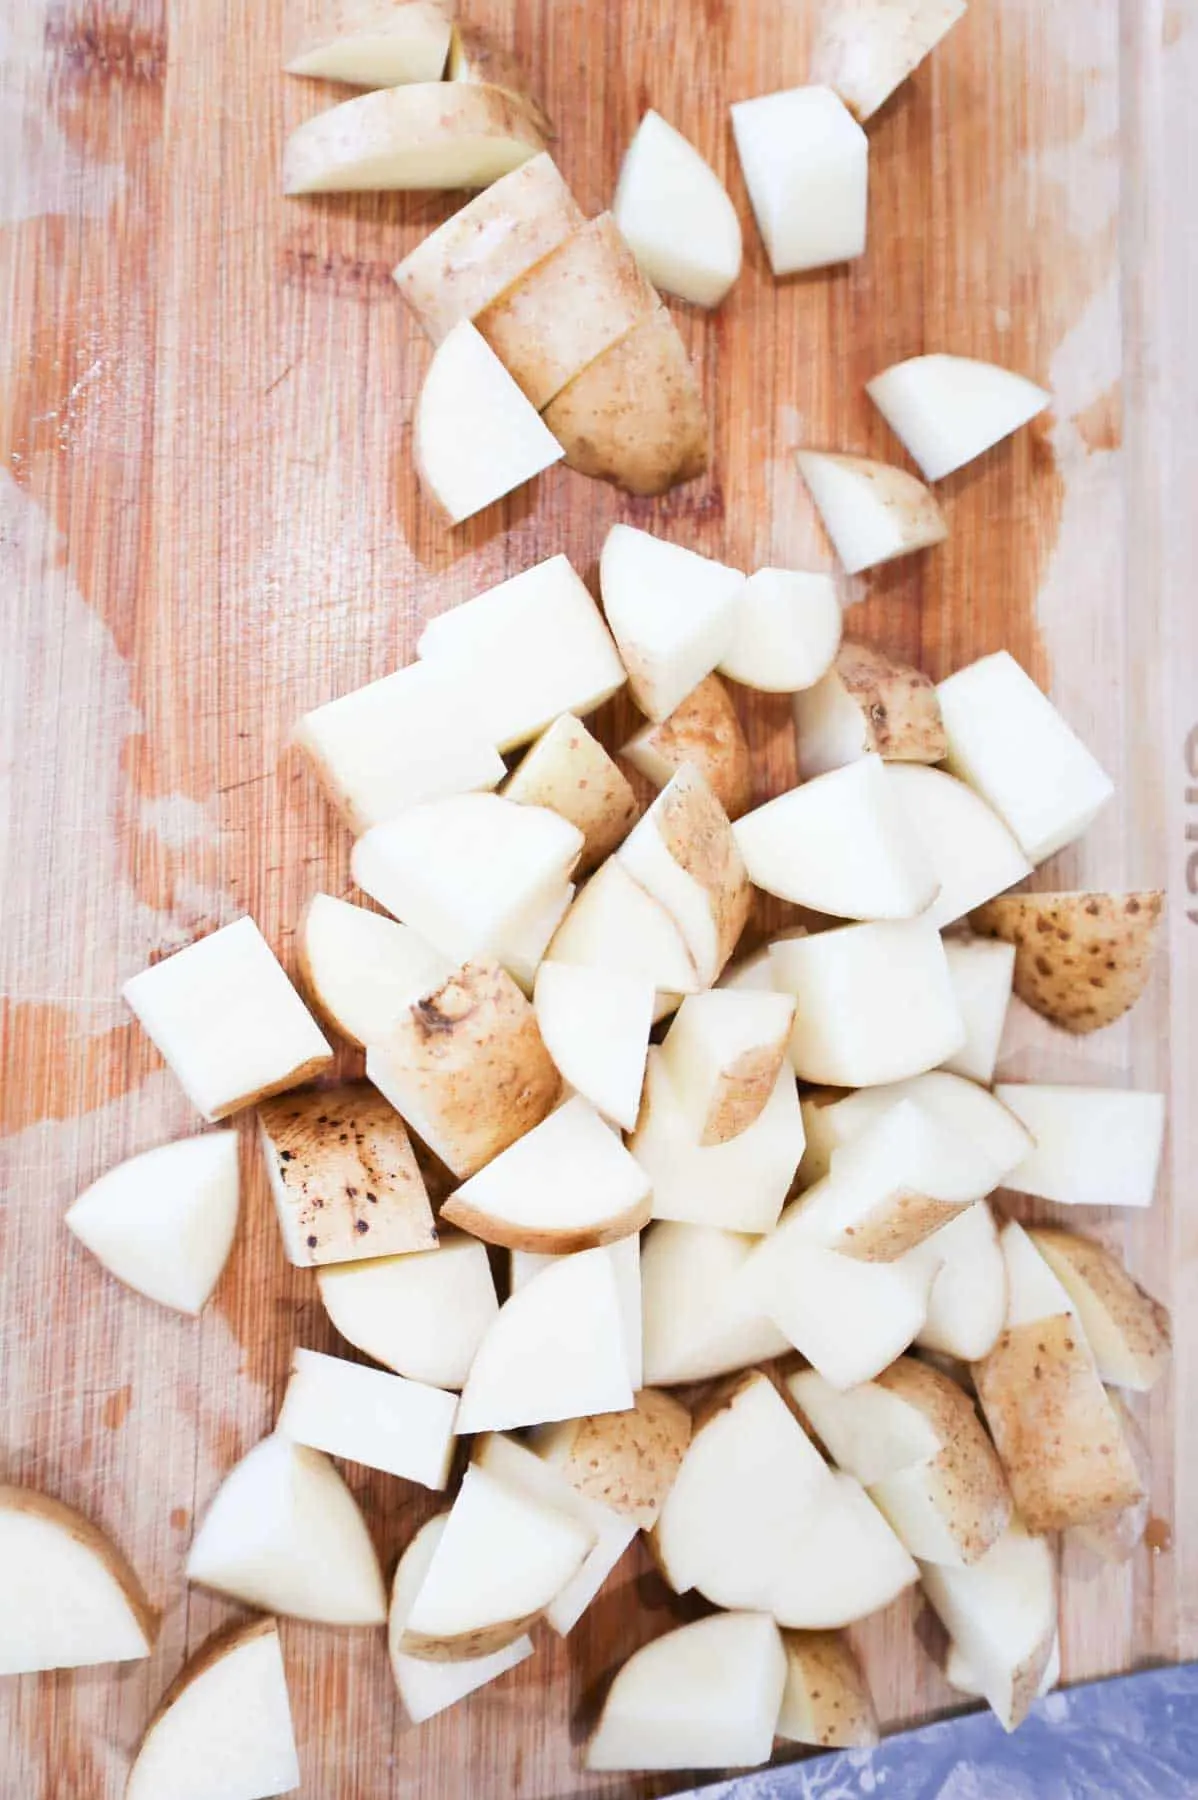 chopped russet potatoes on cutting board